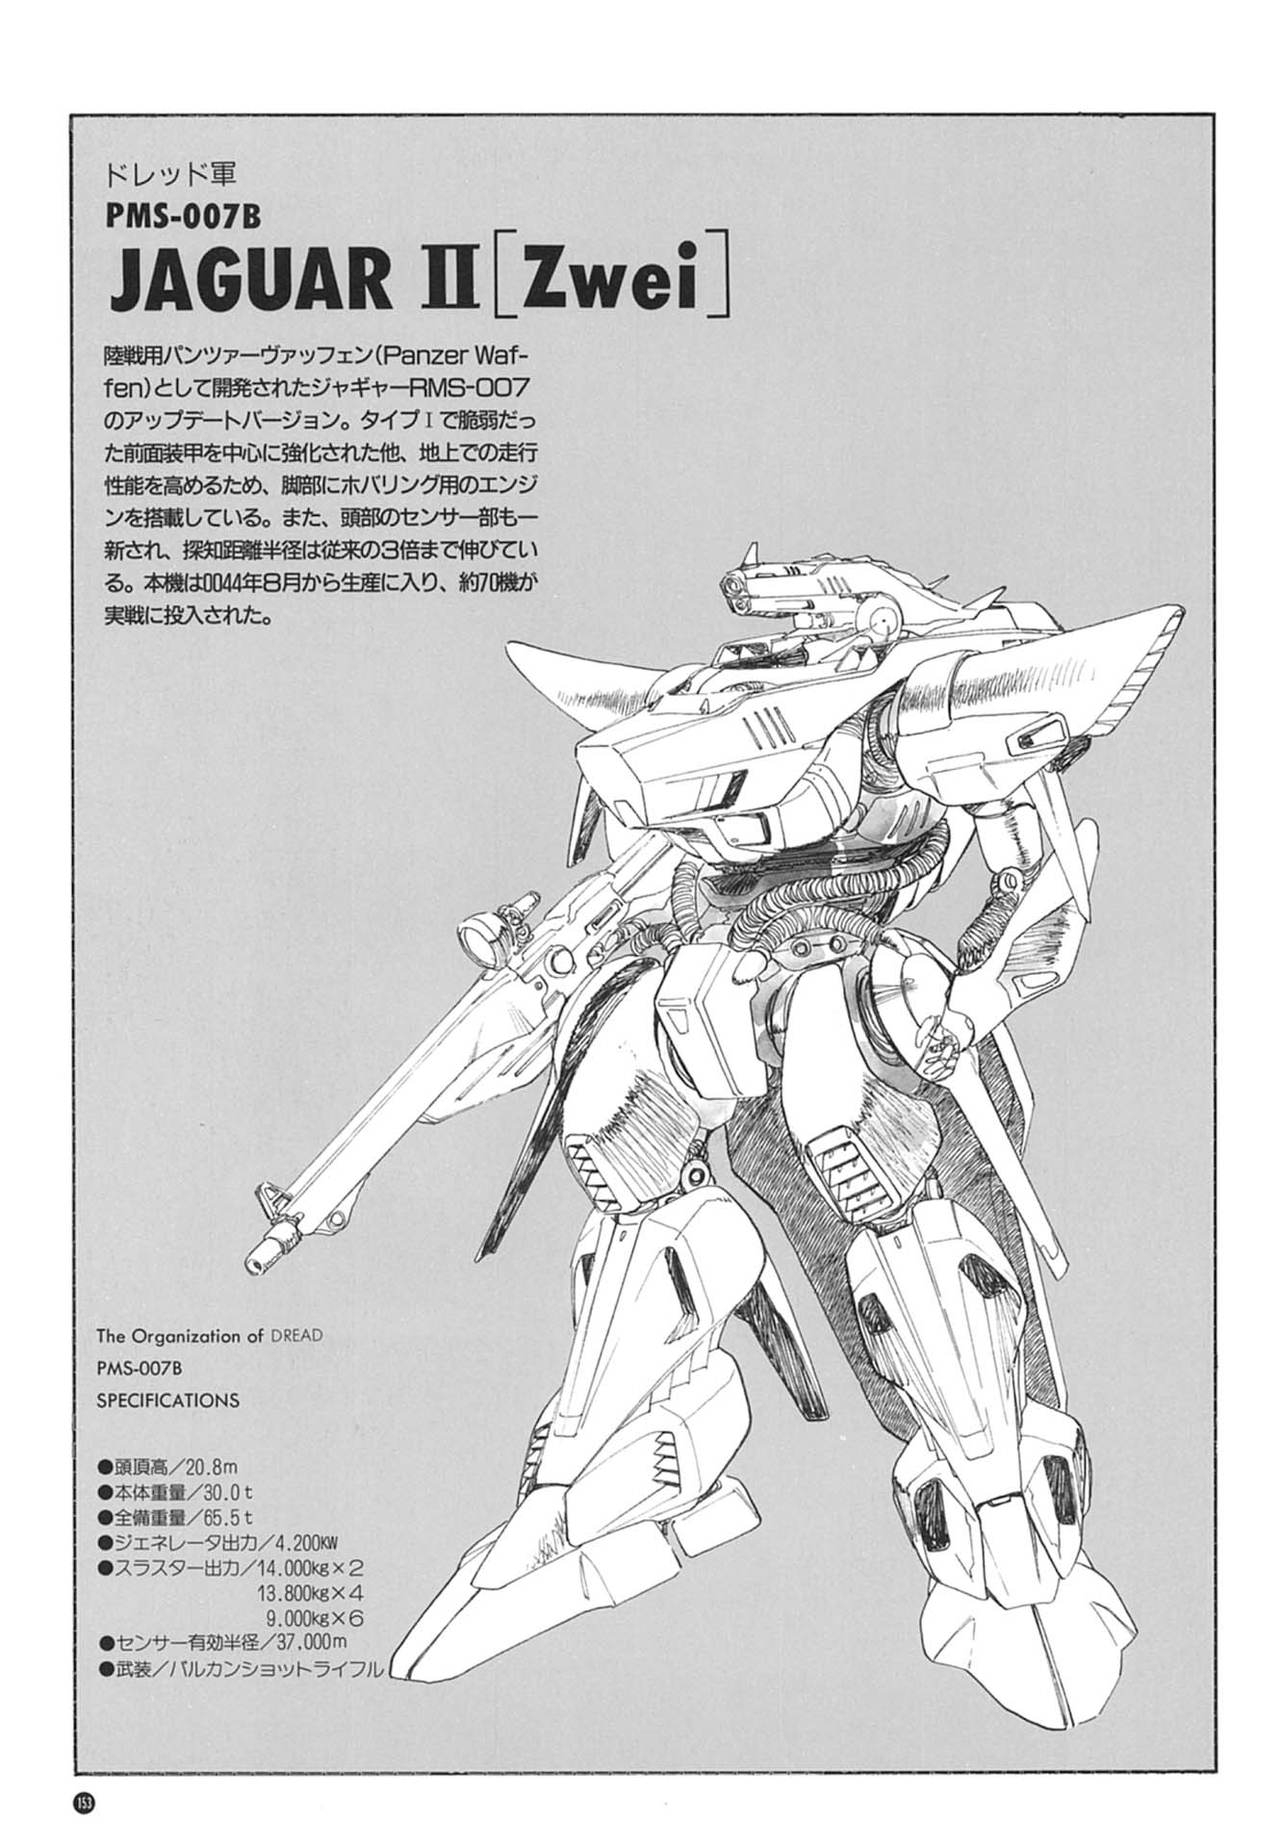 [Kazuhisa Kondo] Kazuhisa Kondo 2D & 3D Works - Go Ahead - From Mobile Suit Gundam to Original Mechanism 152